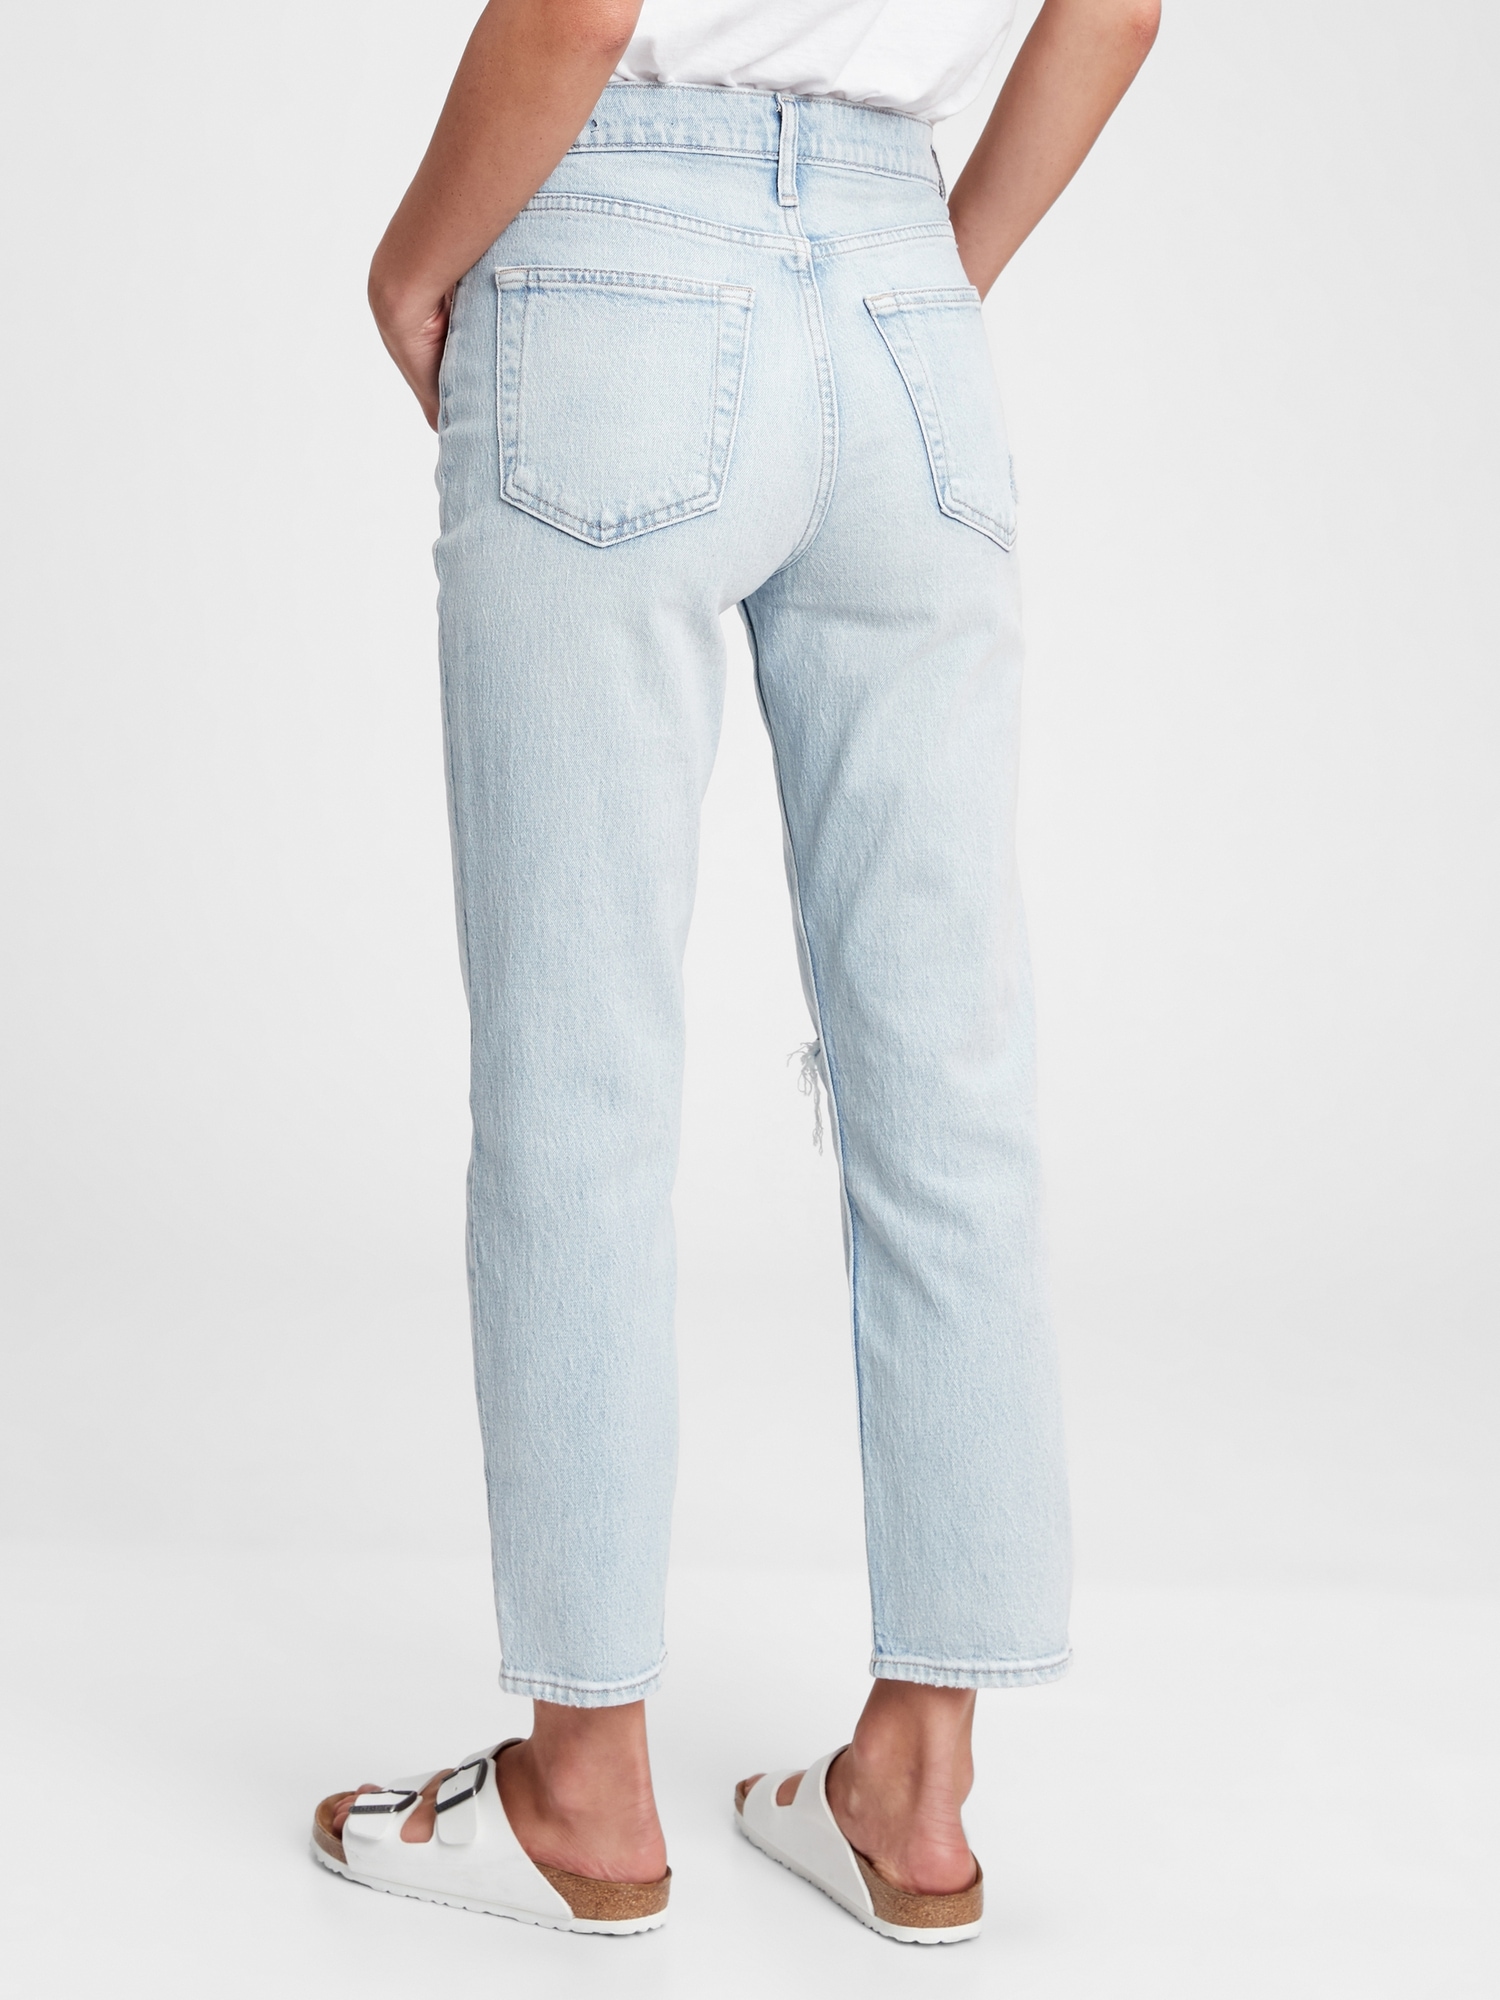 165296 NWT Womens GAP Premium Straight Jeans Denim Distressed